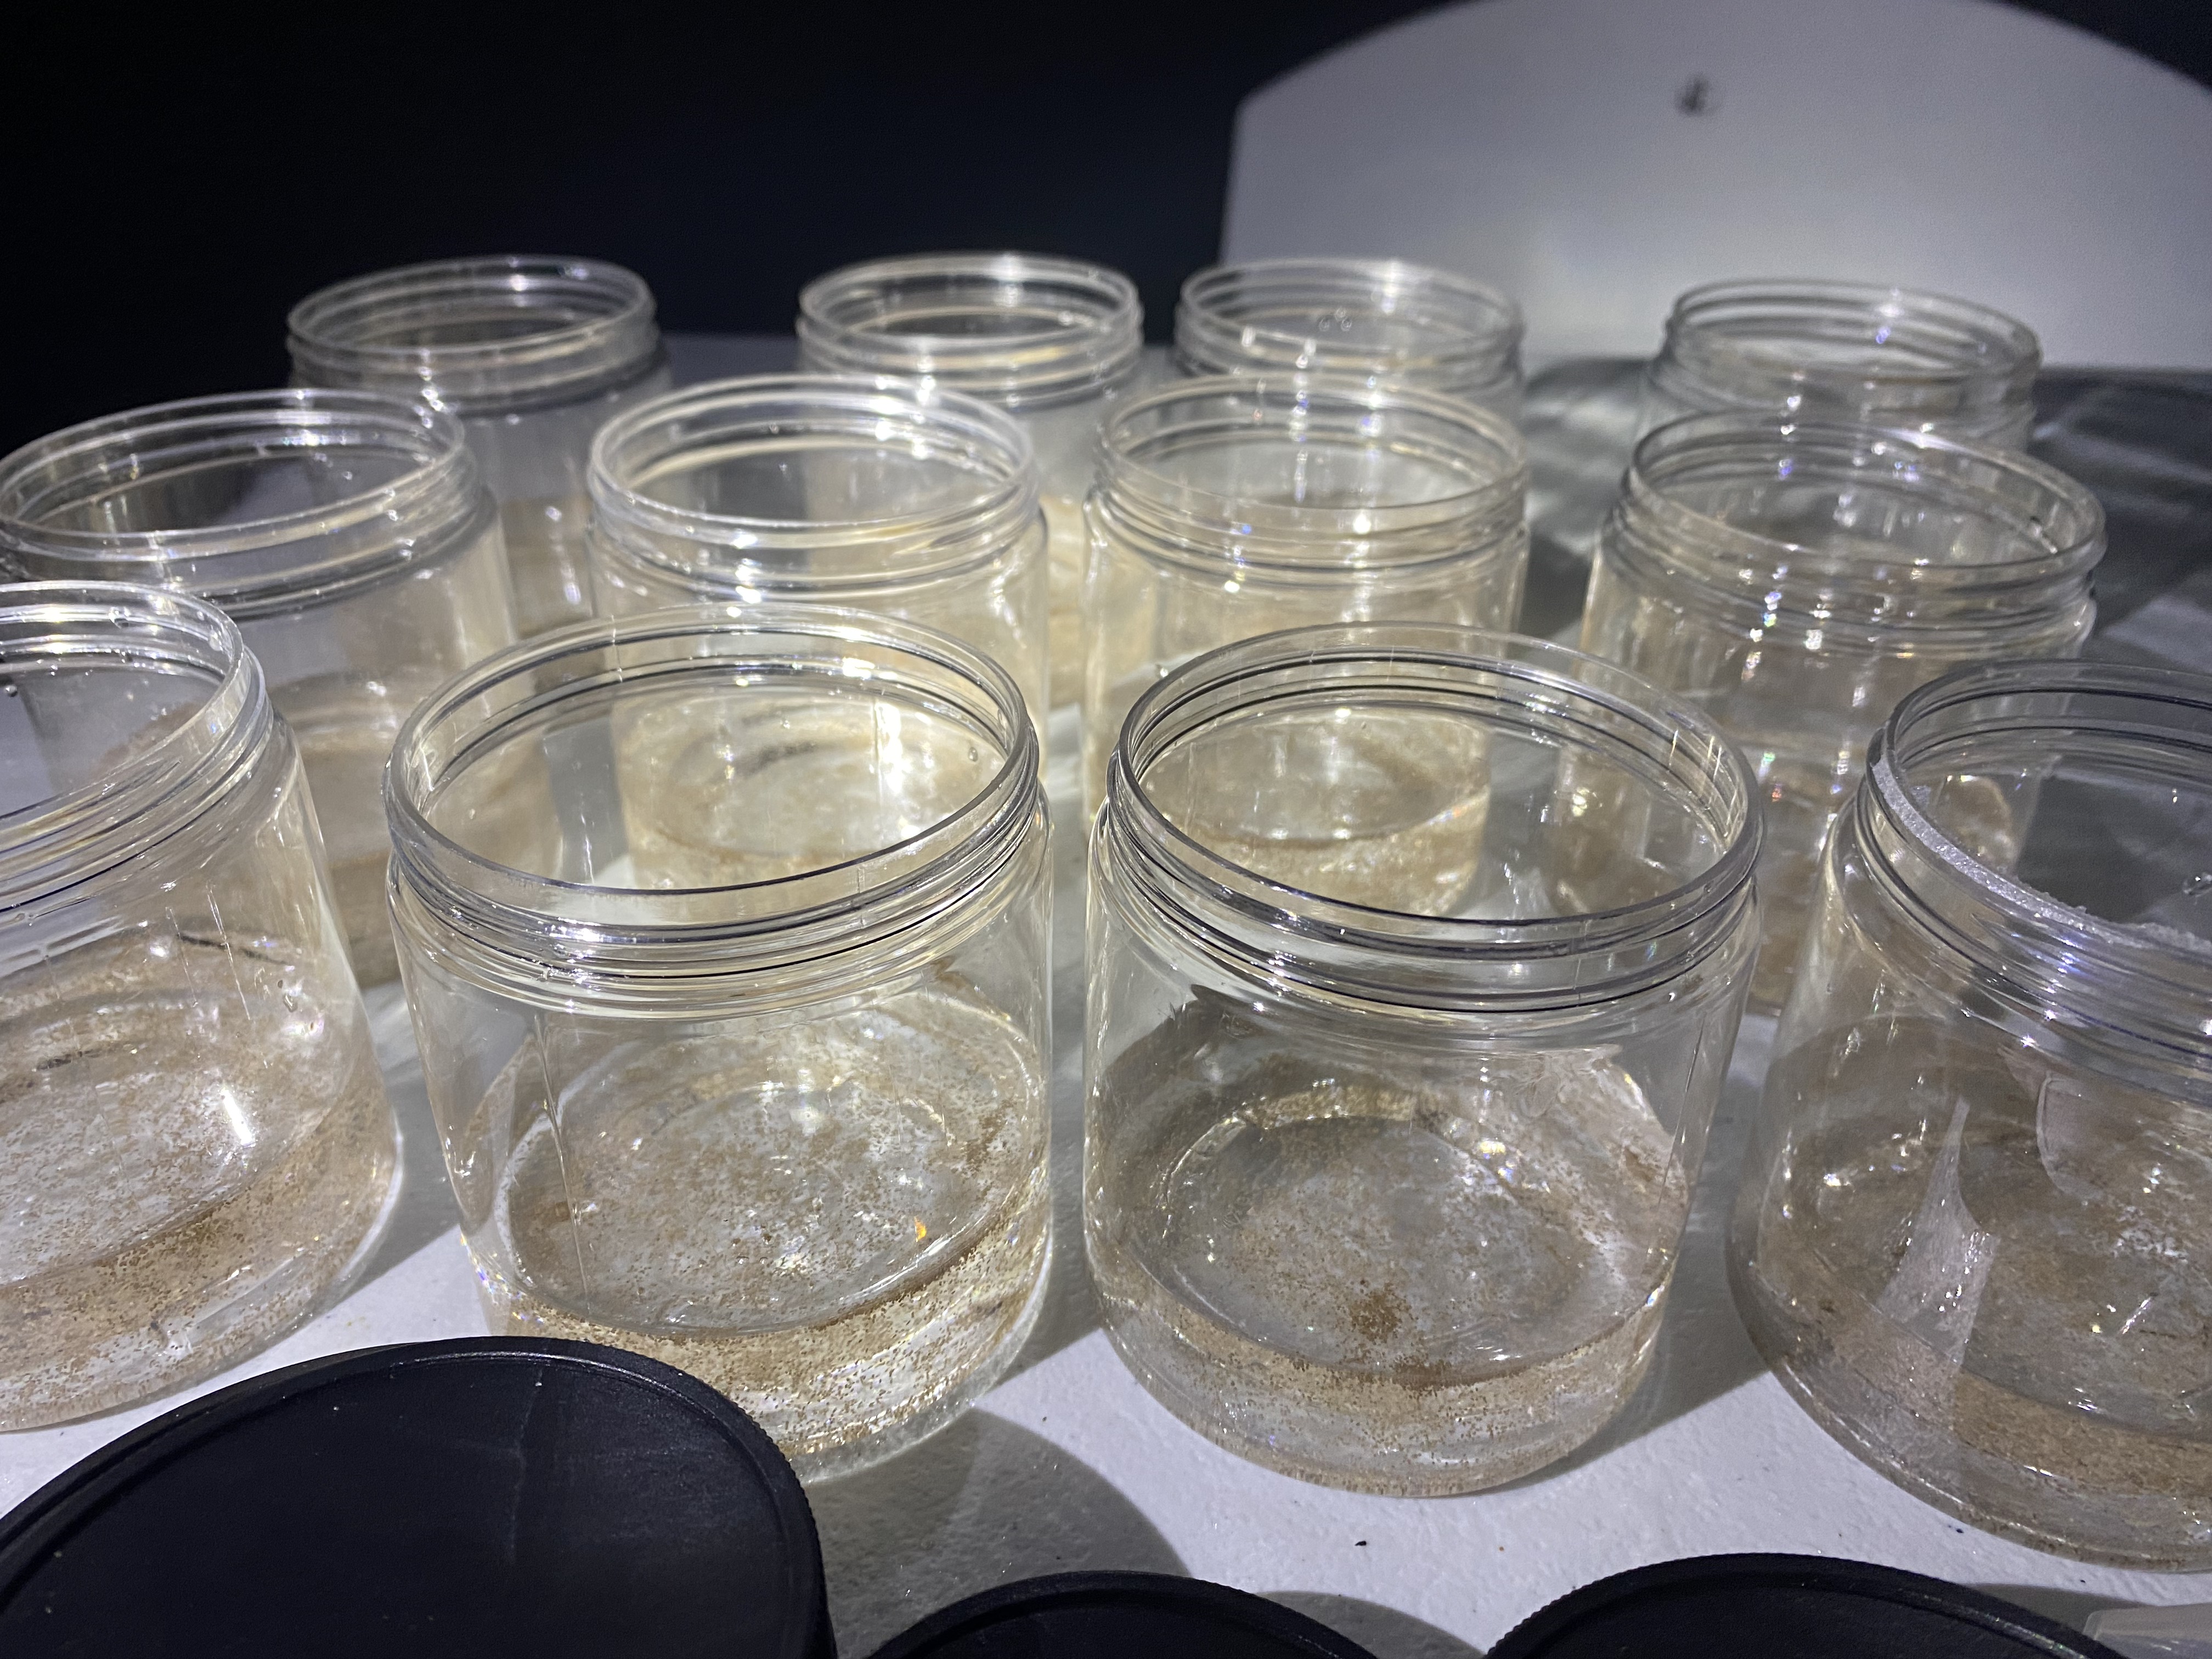 Larvae pooled in jars